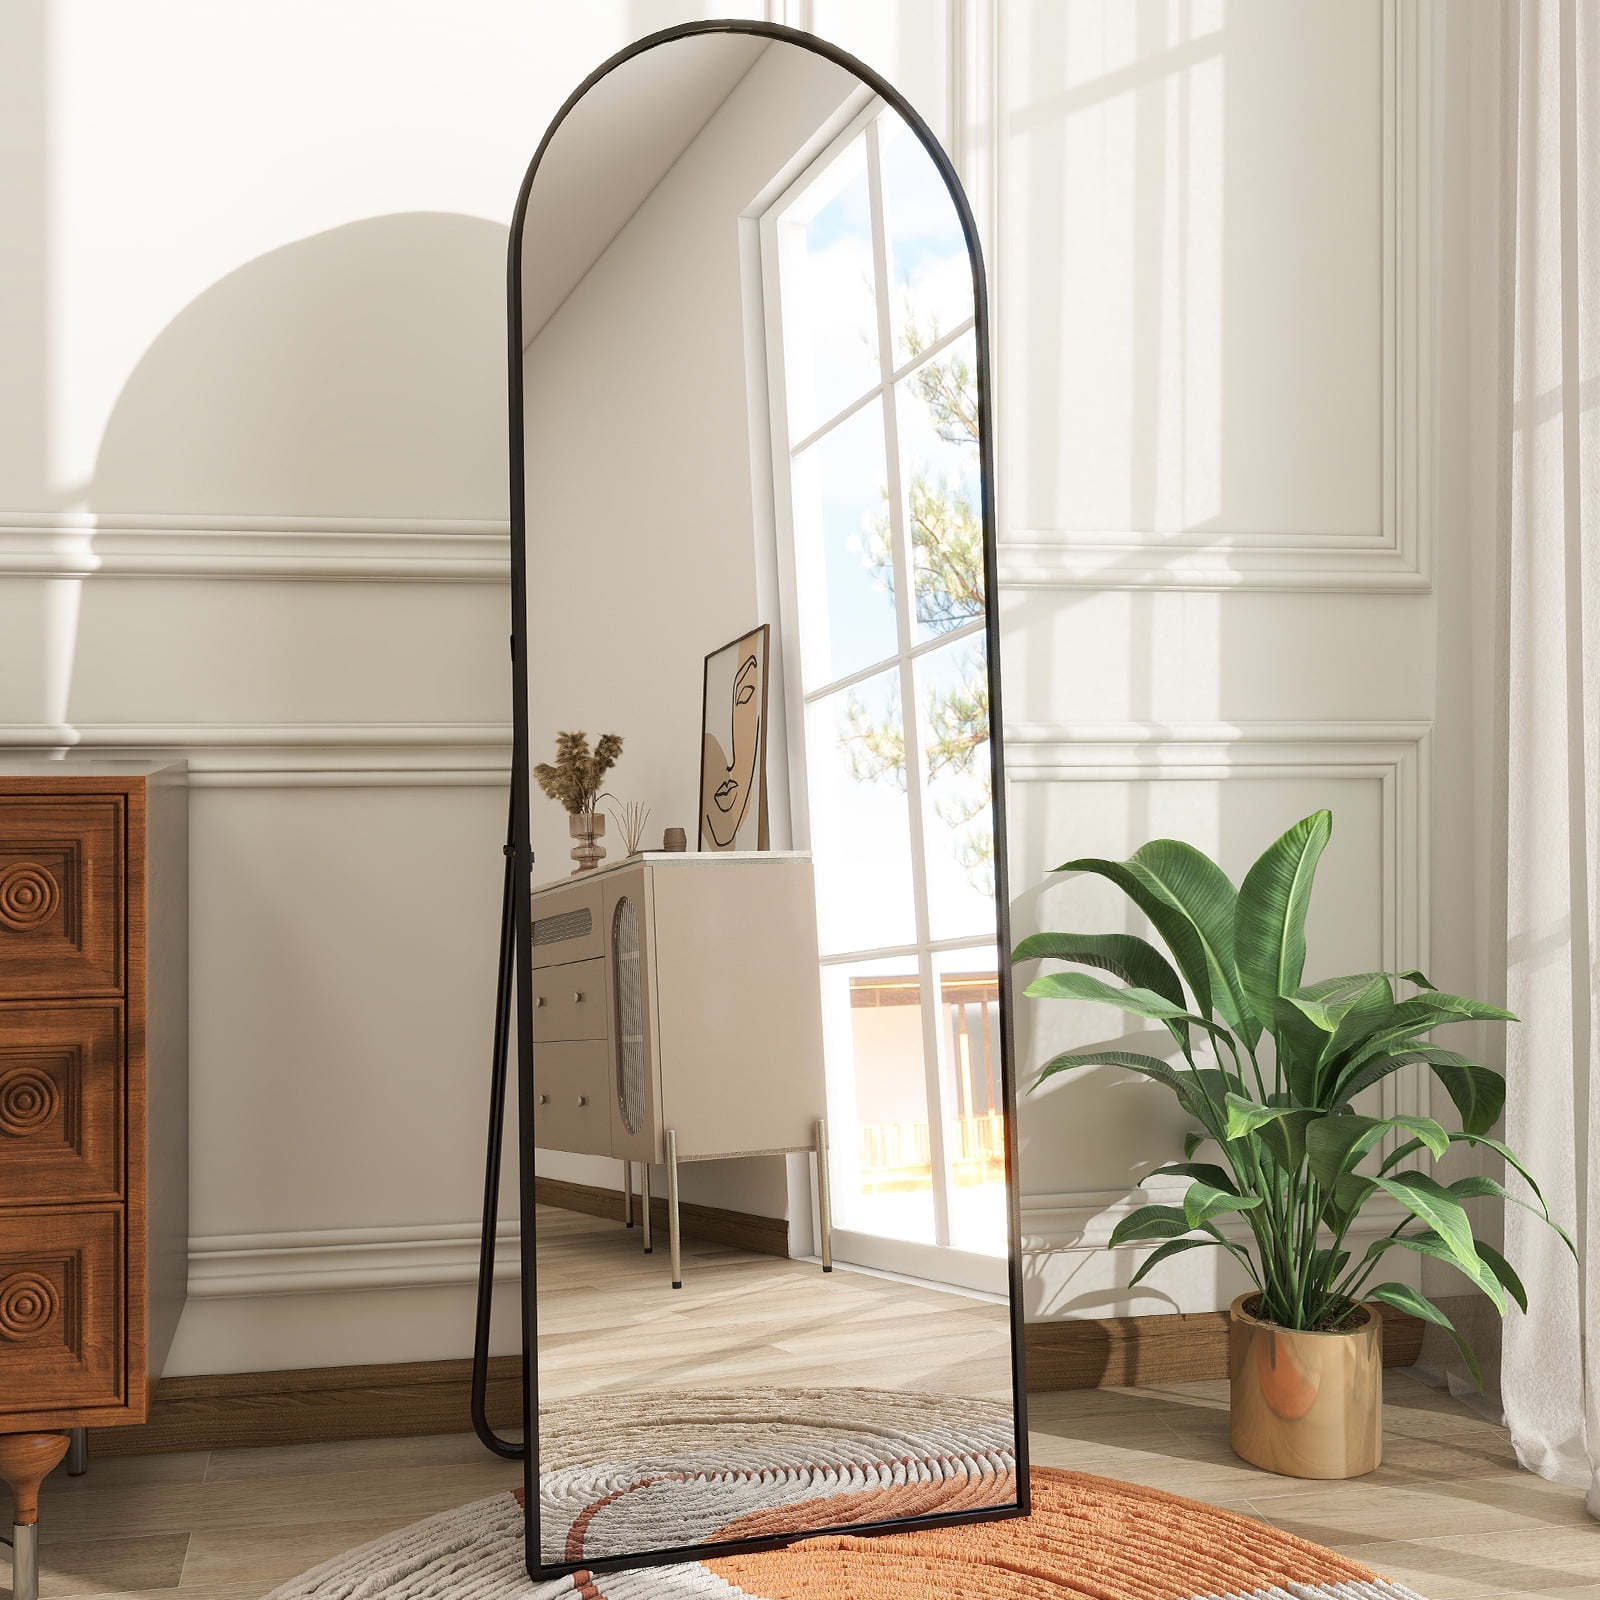 HOVET Mirror, black, 303/4x771/8 - IKEA